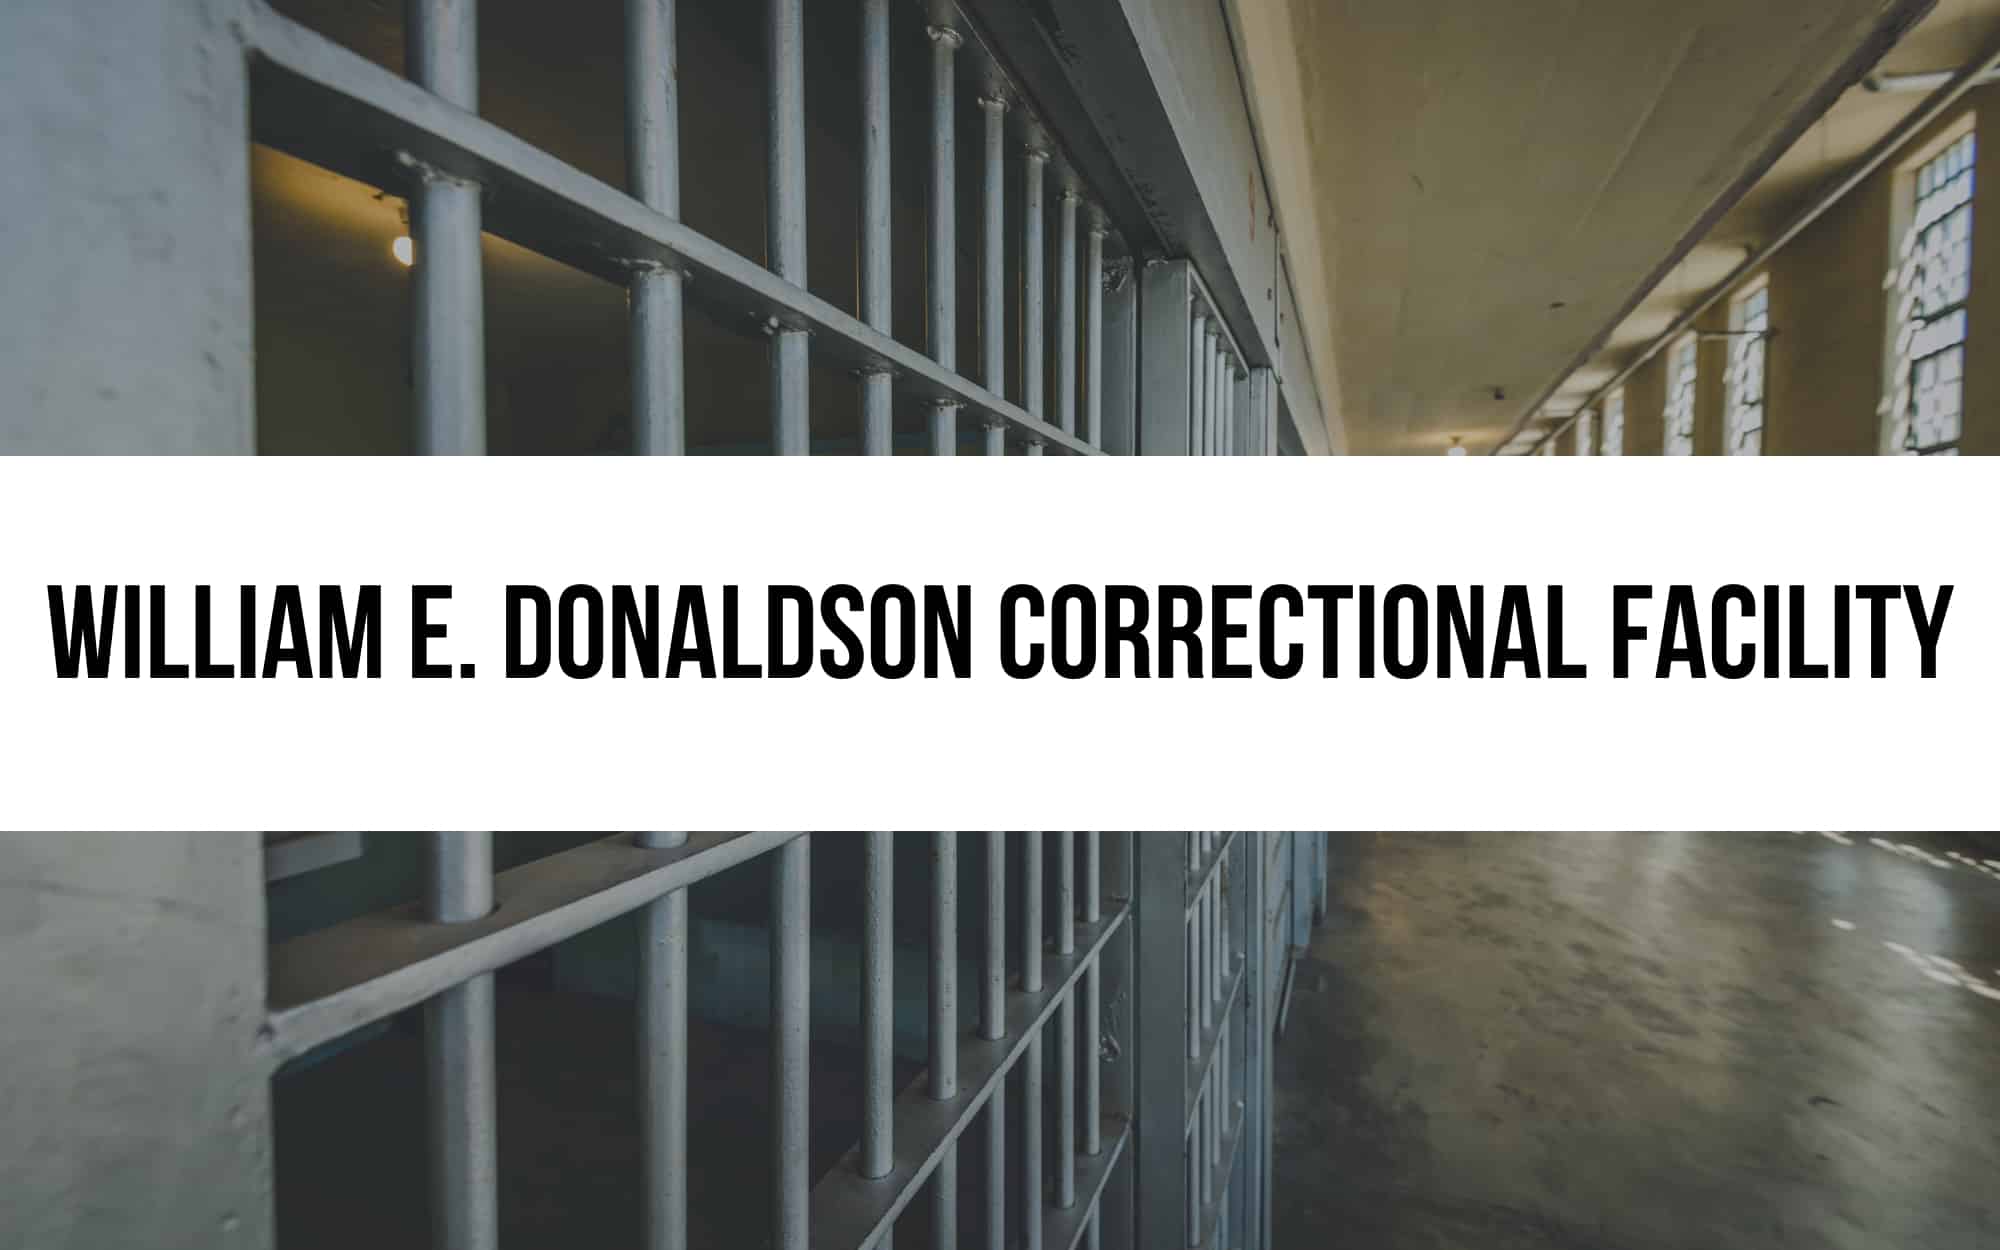 William E. Donaldson Correctional Facility